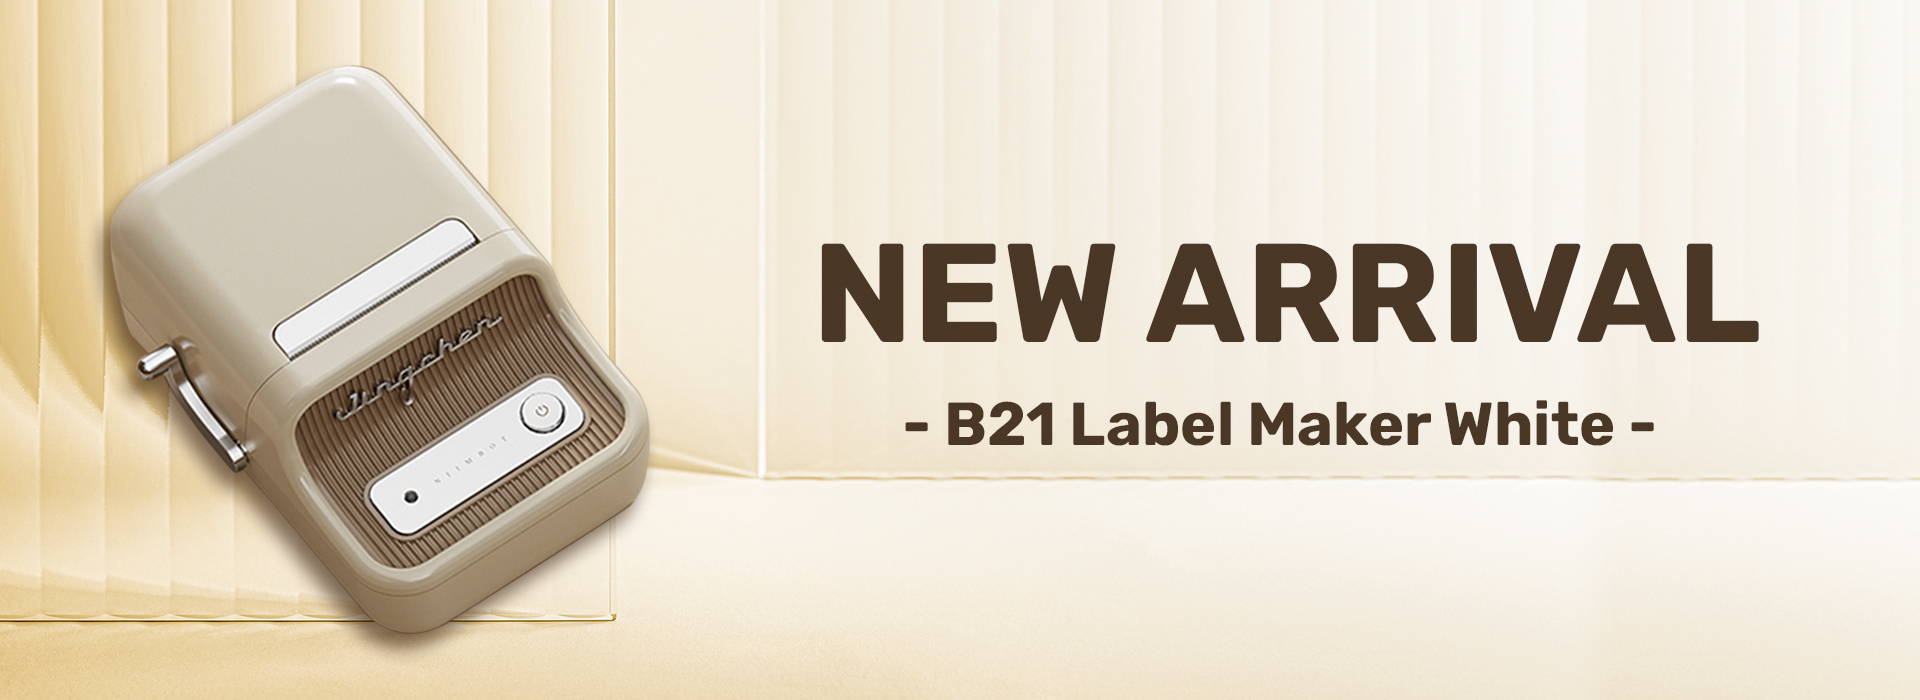 Niimbot™ B1 Label Maker – Niimbot Label Maker